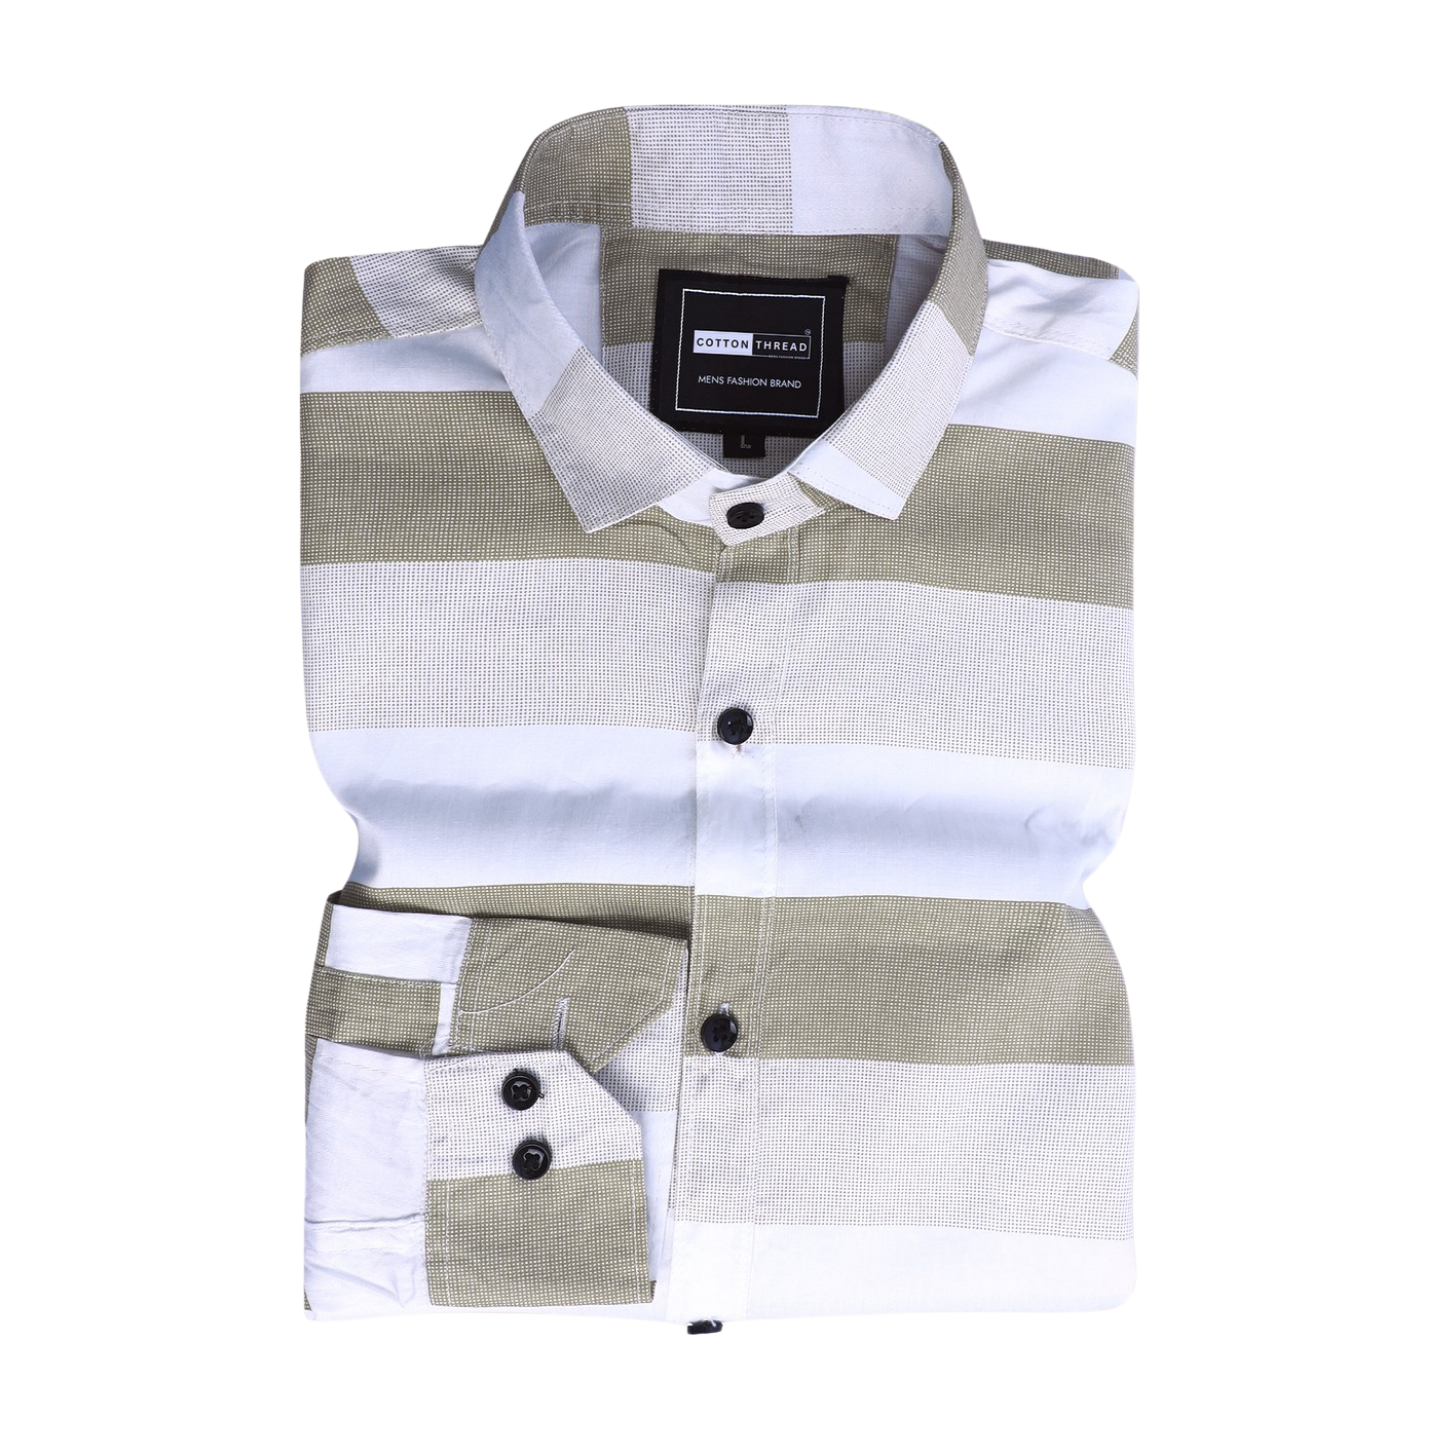 Men's Premium Formal Full Sleeve Grey White Striped Shirt By Cotton Thread (STR-019)